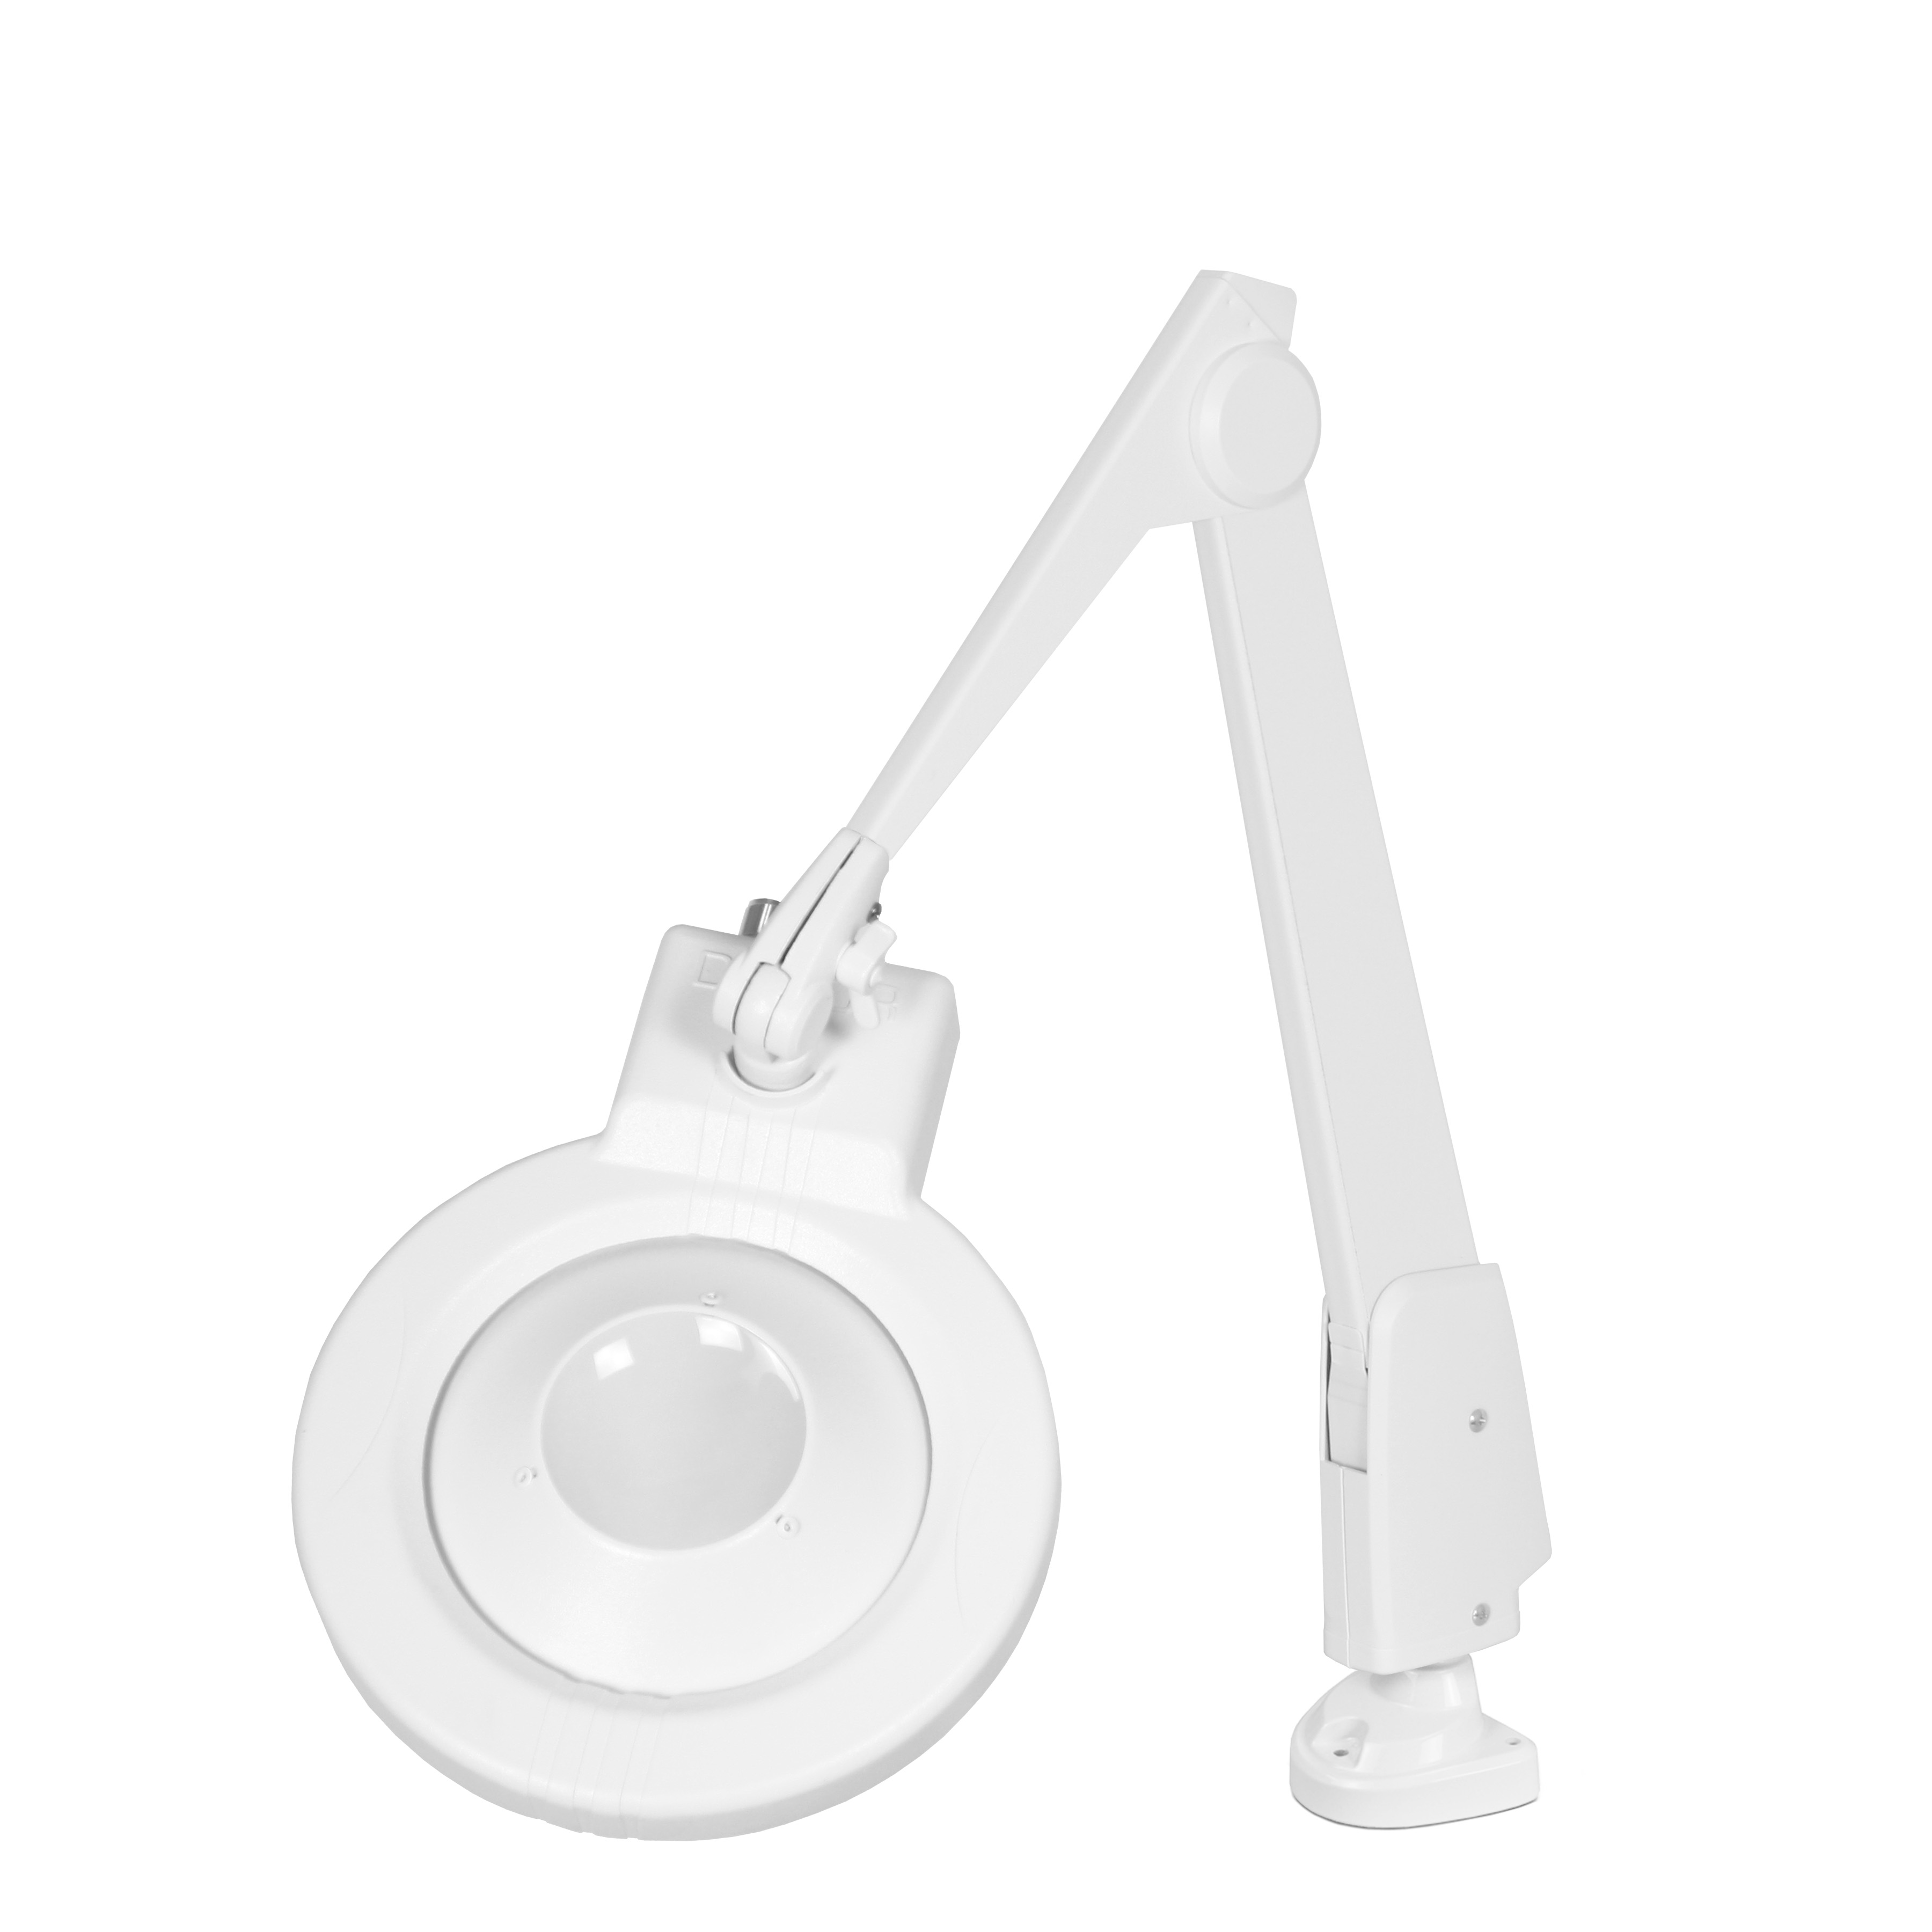 Dazor  LED Circline Desk Base Magnifier Lamp (33 in.)